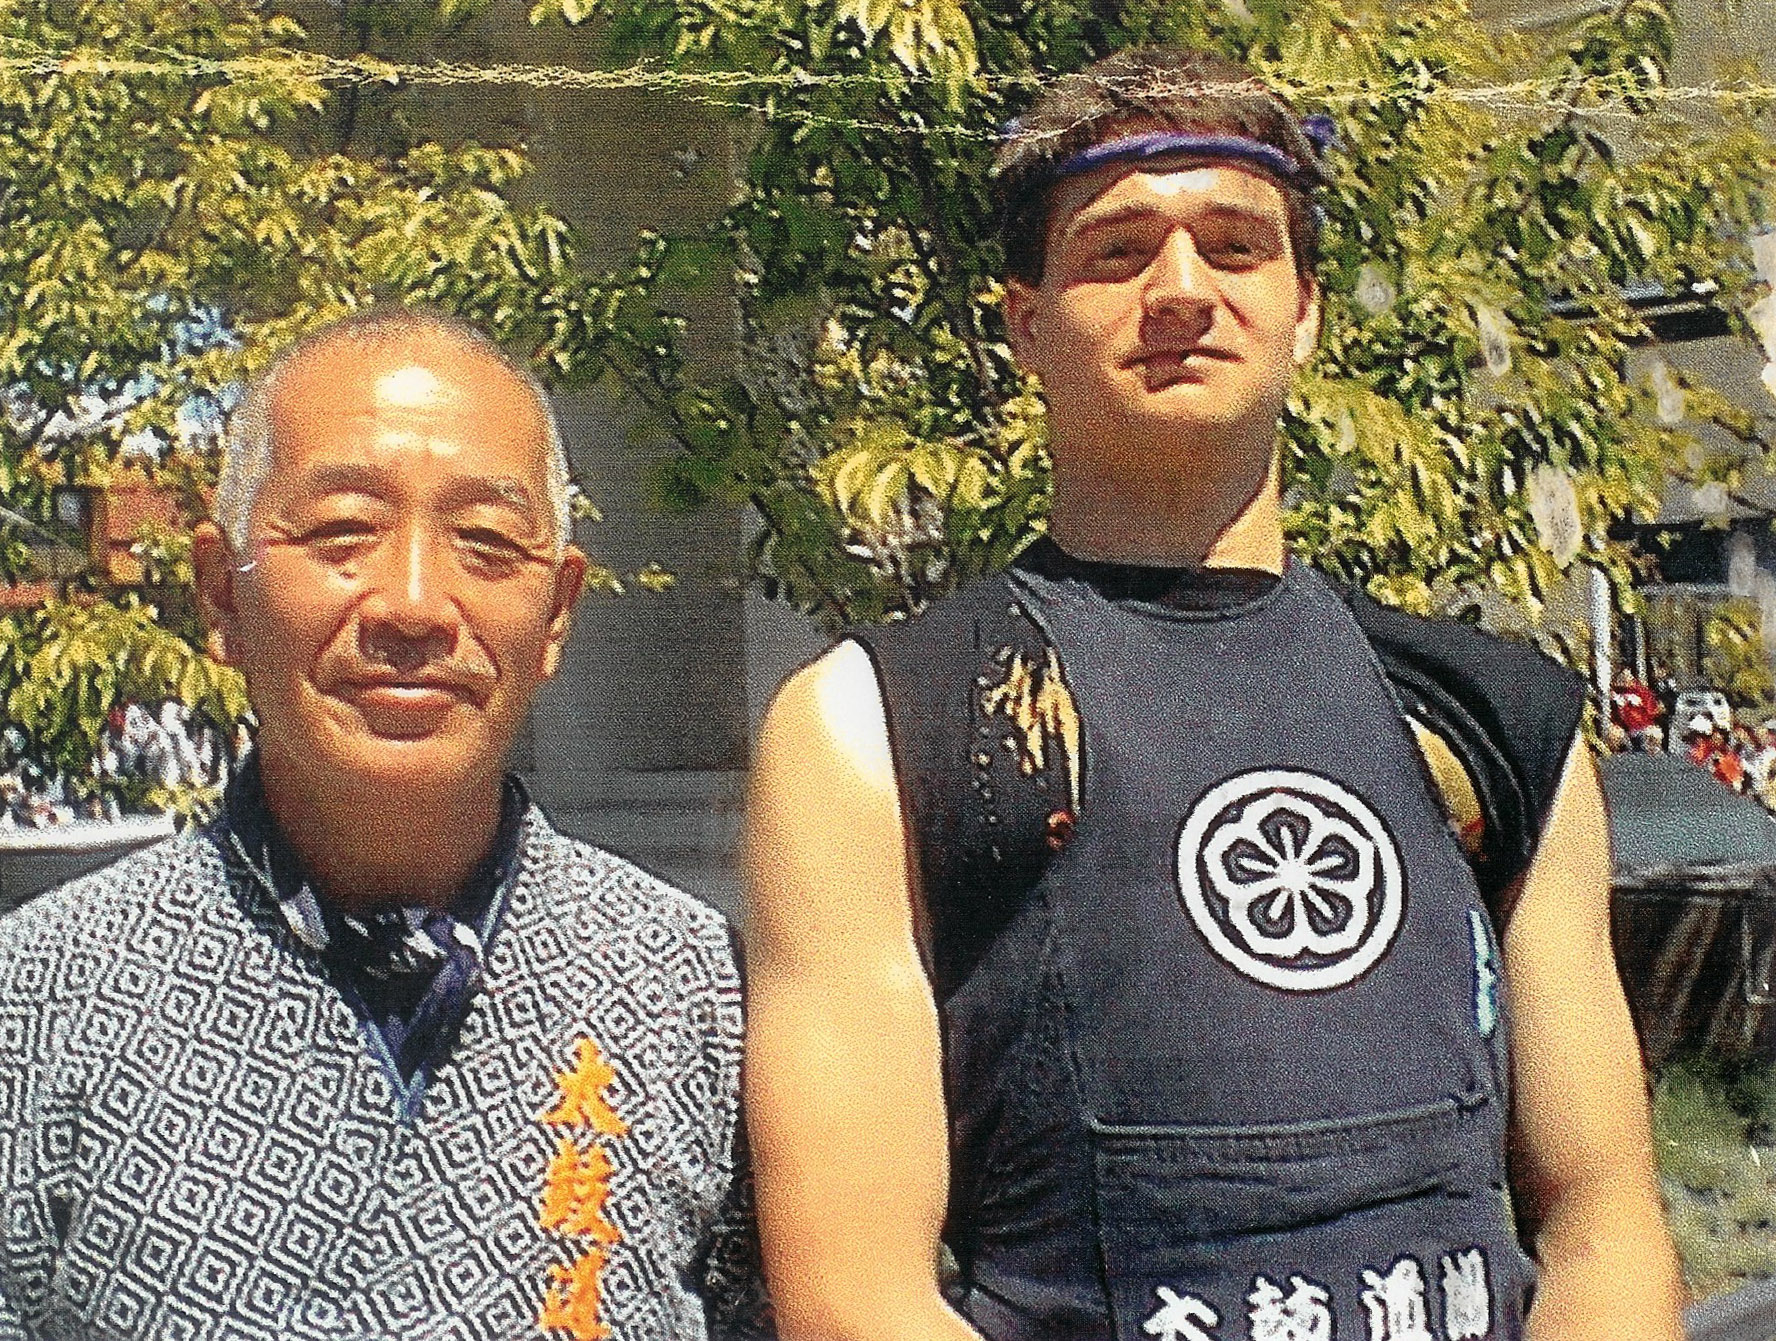 grand master seiichi tanaka and brad carr